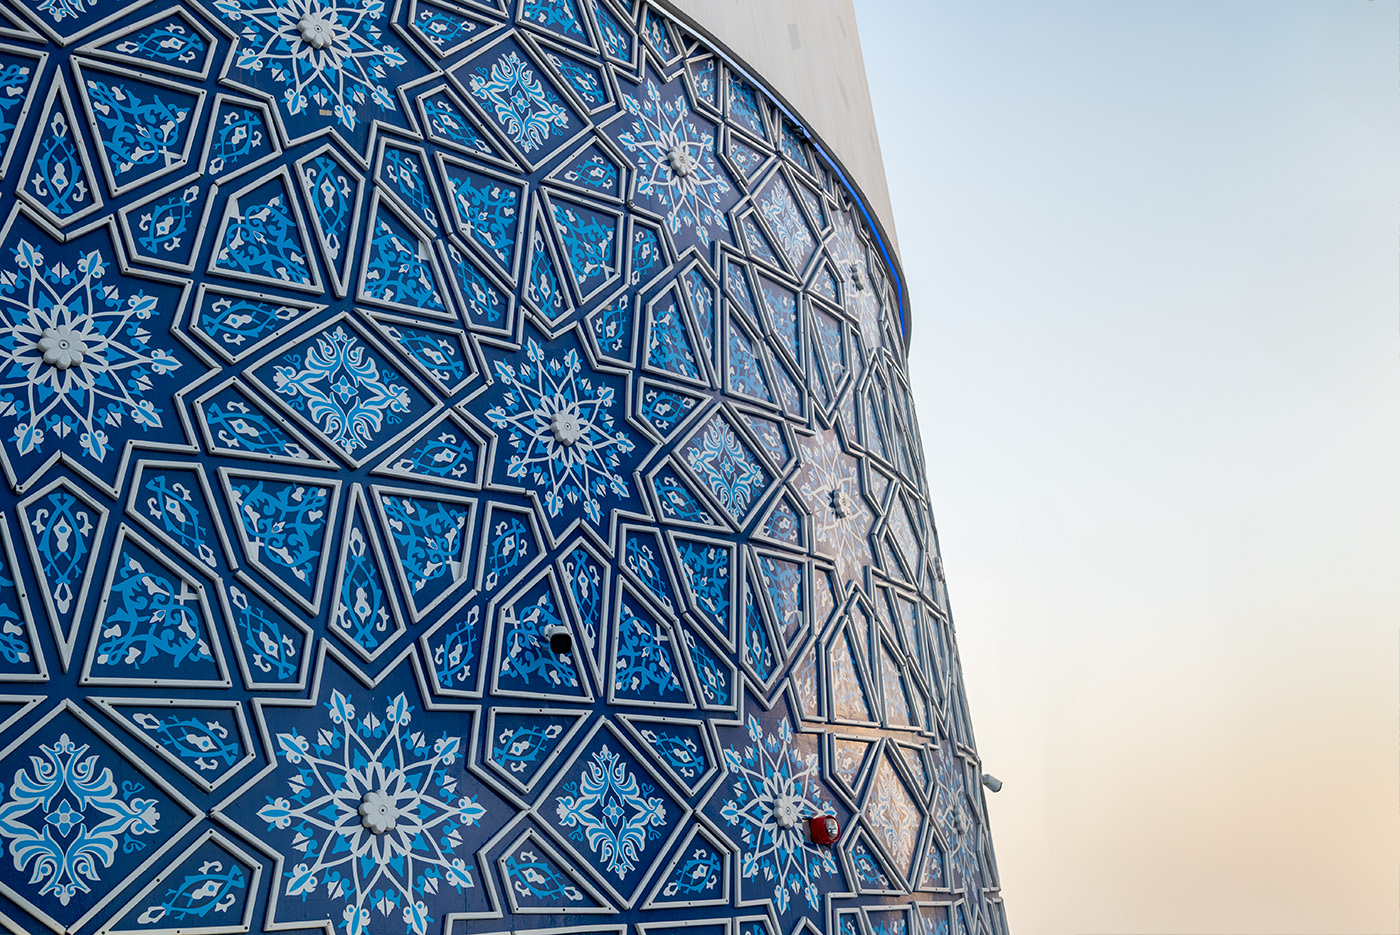 Pattern detailing of the exterior of the Uzbekistan pavilion